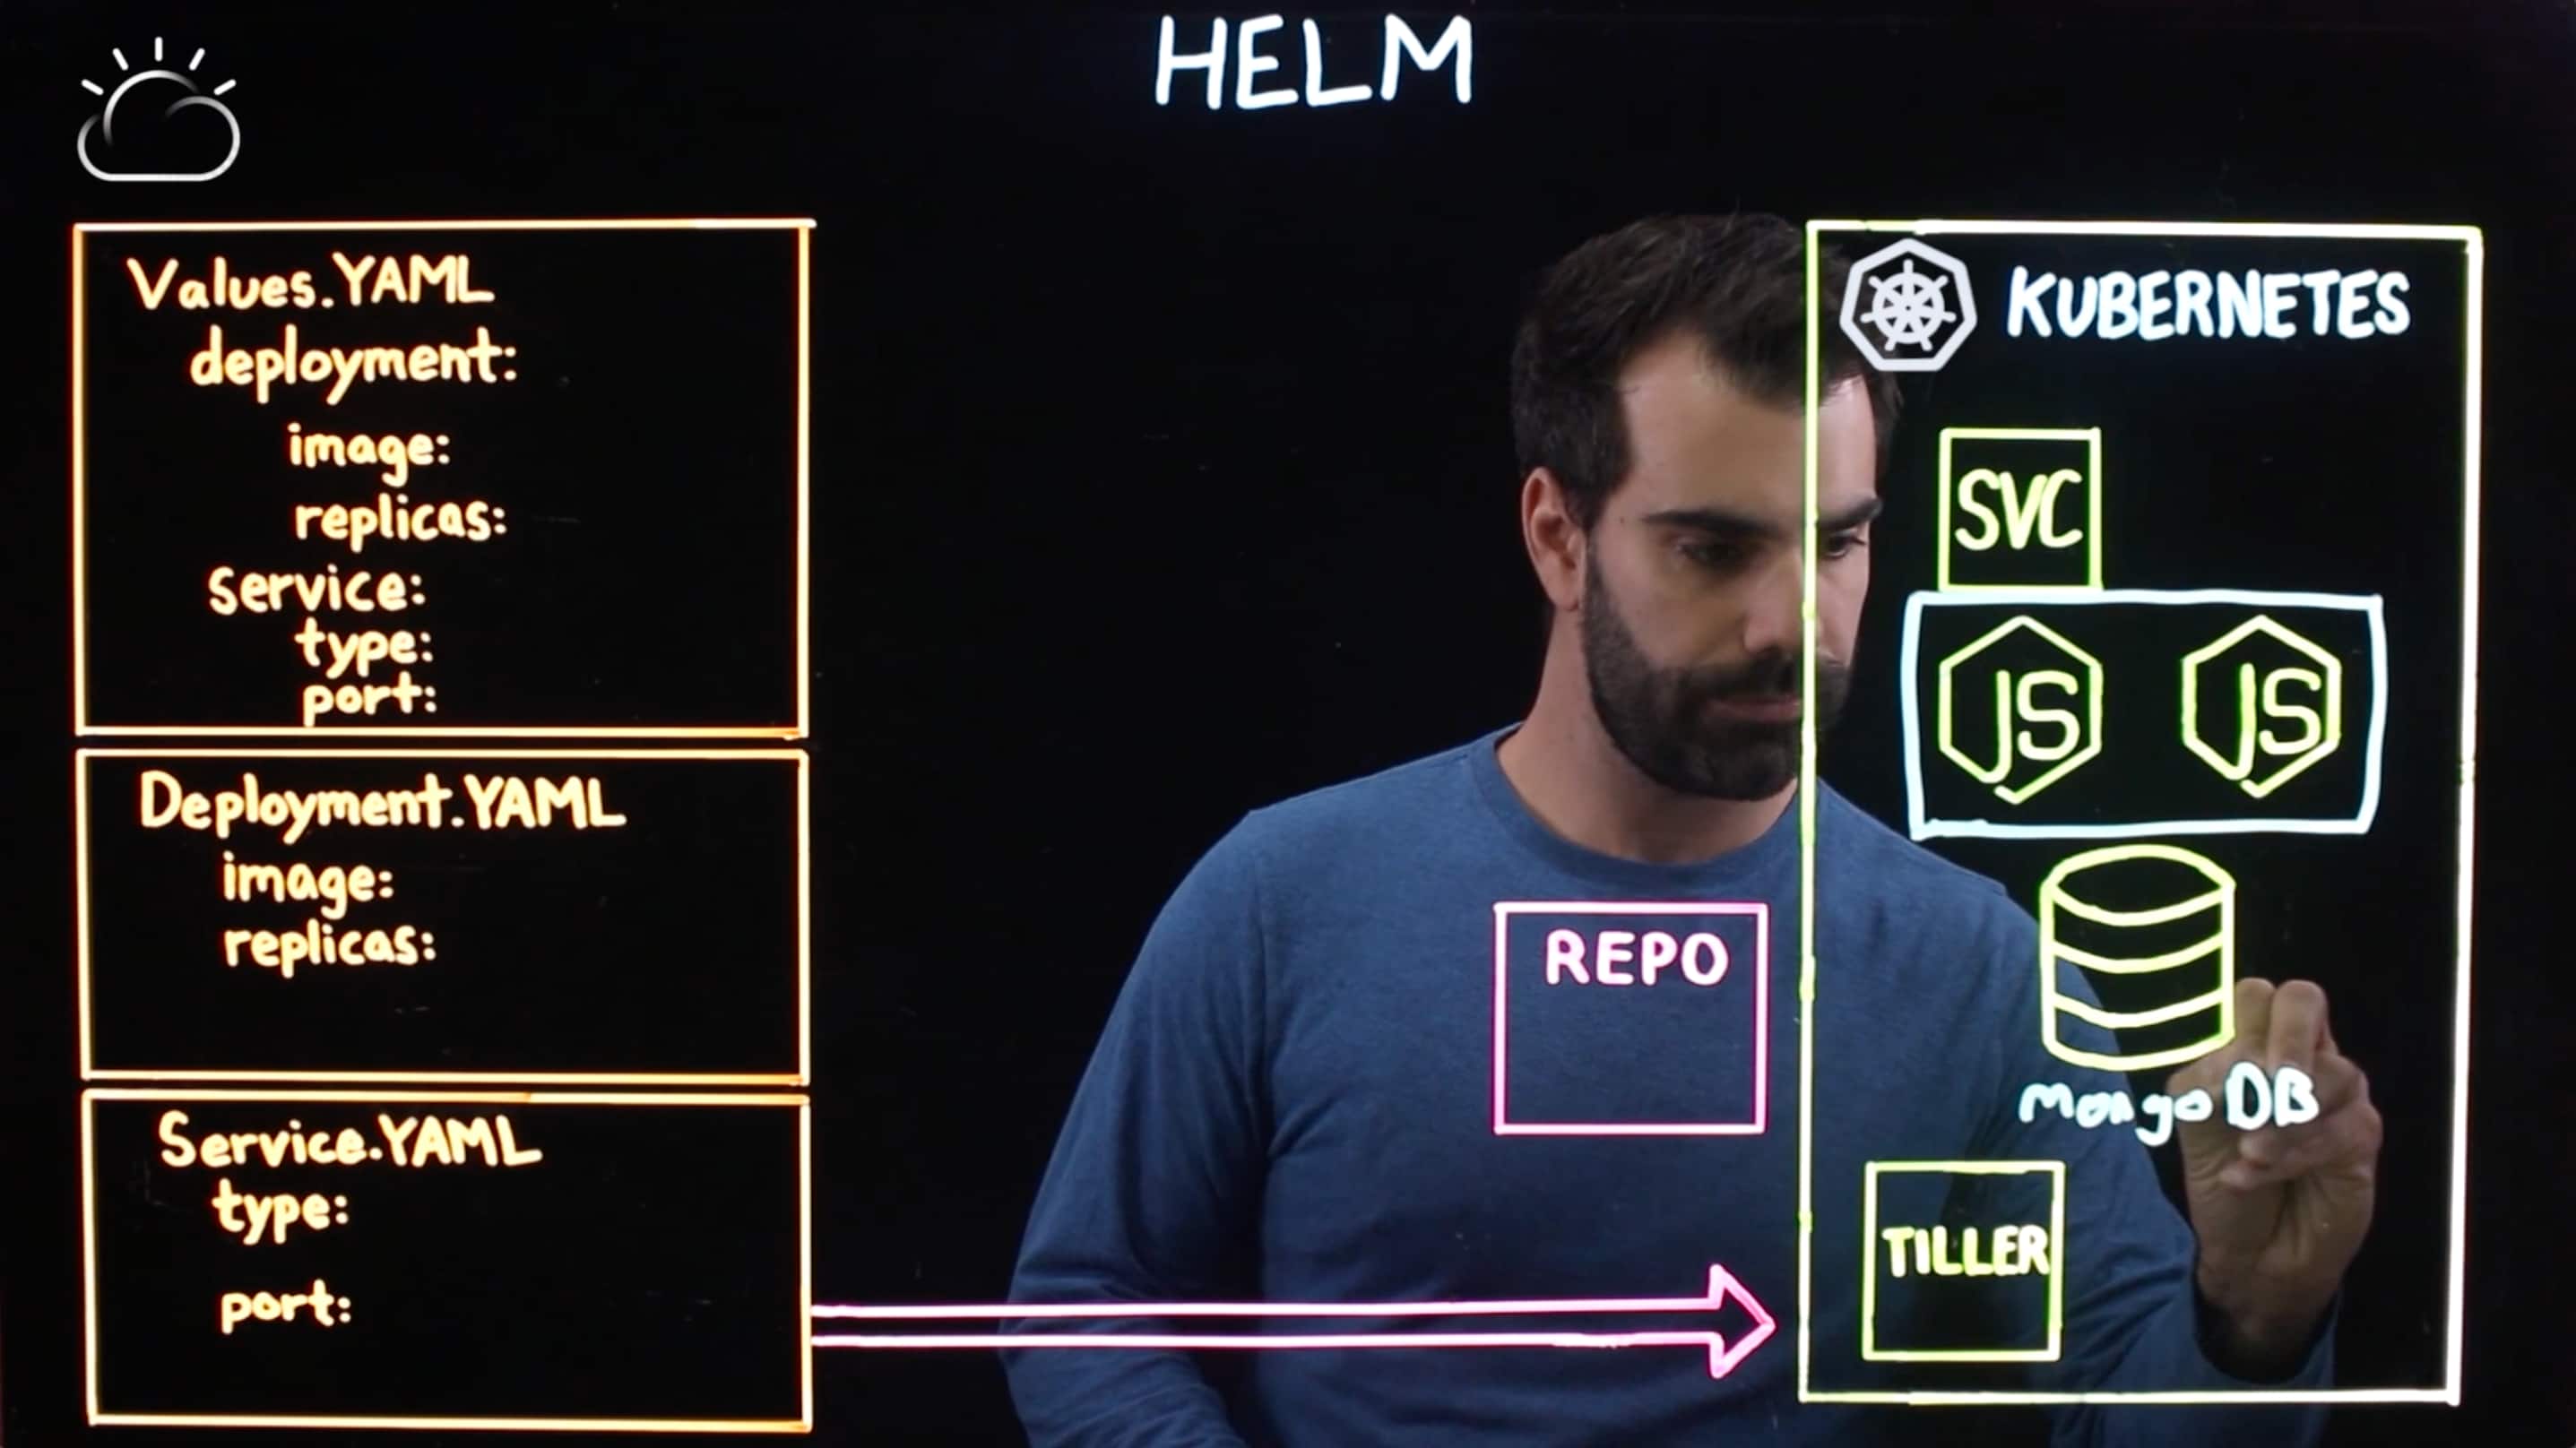 VIDEO – What is Helm? - IBM Blog